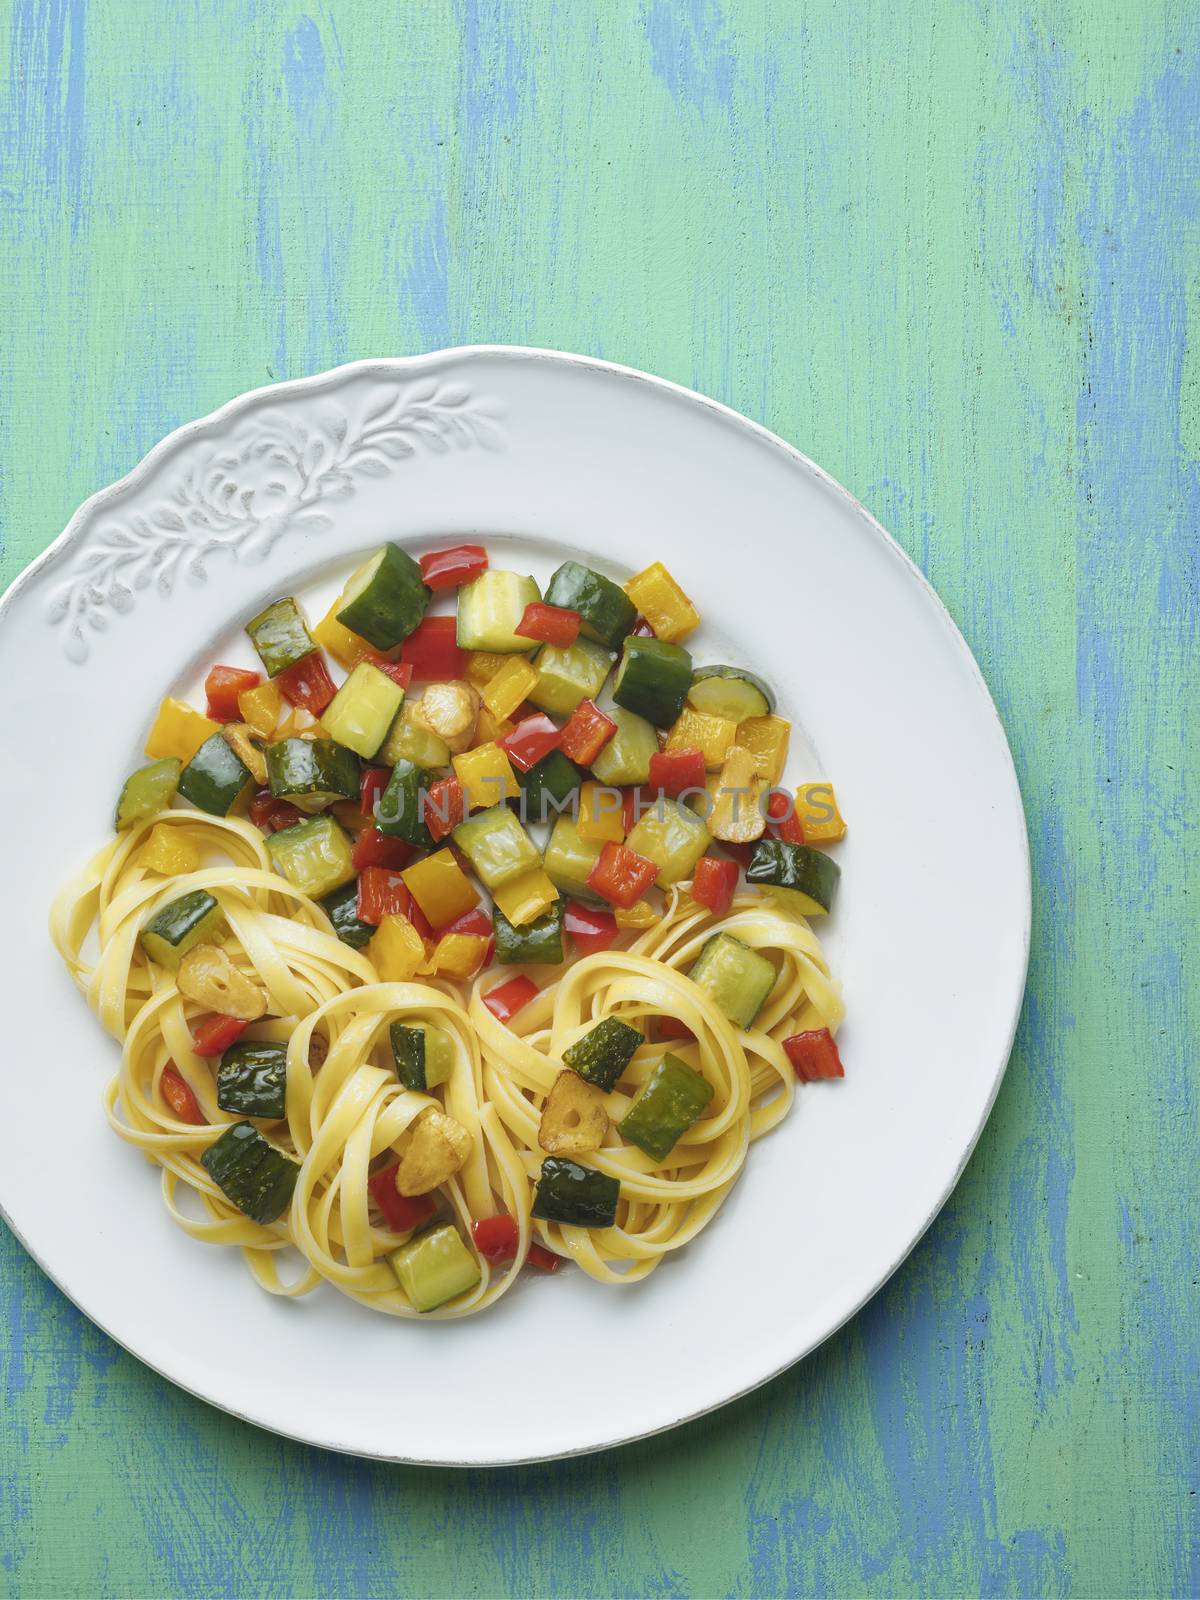 rustic  healthy italian pasta primavera by zkruger